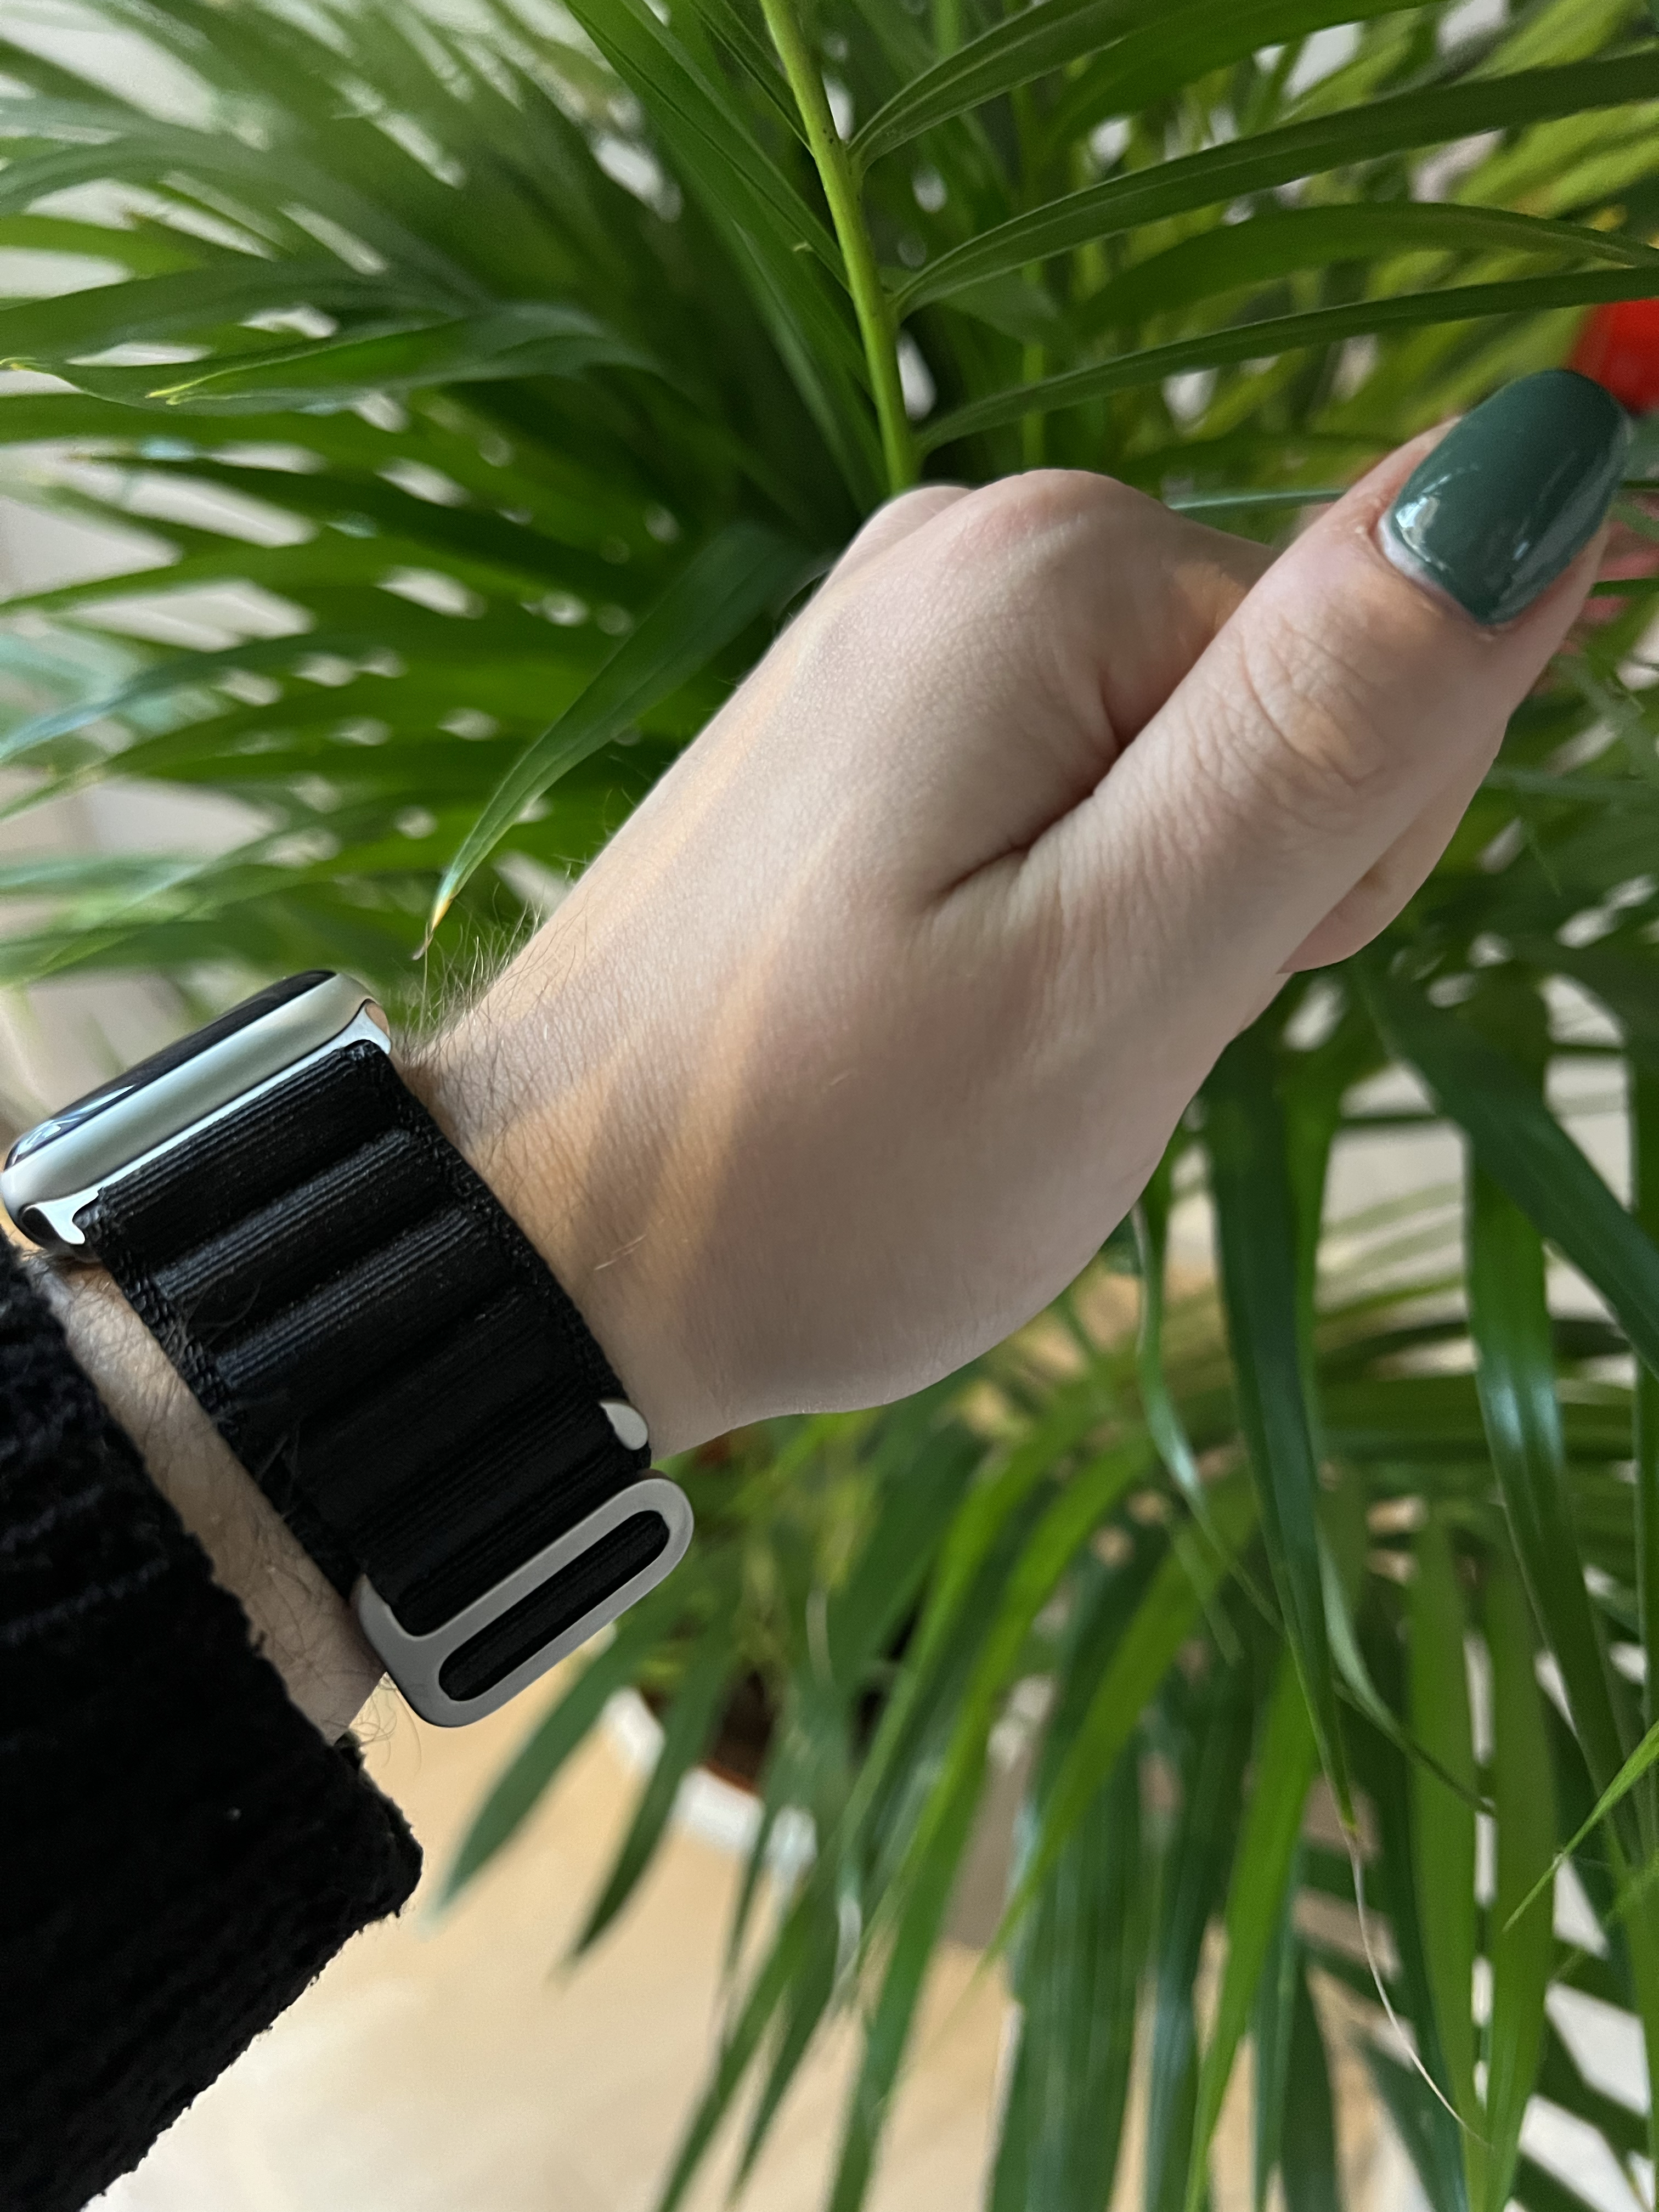 Apple Watch nylon alpine band - zwart